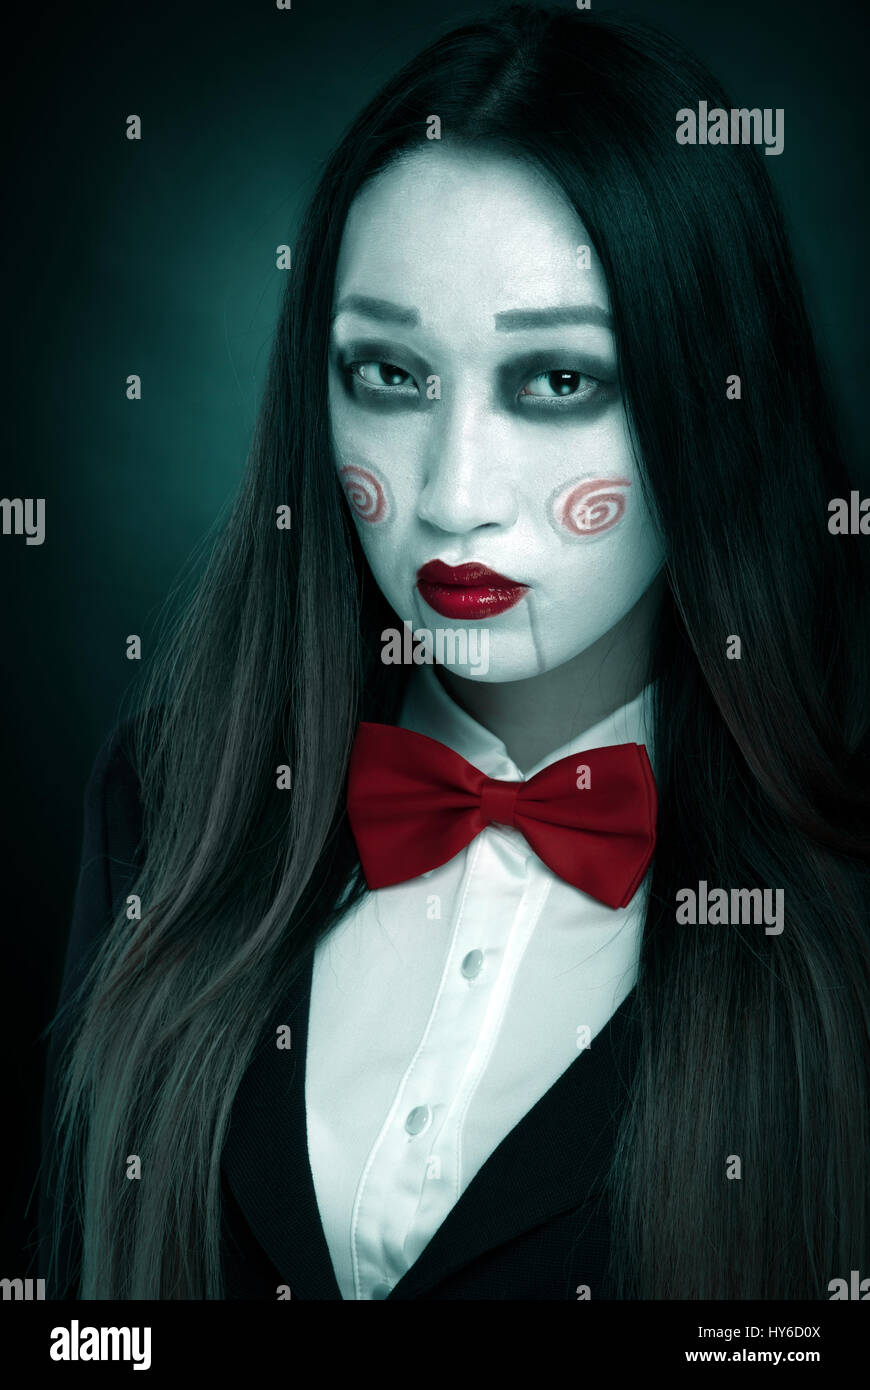 Femme avec un miroir effrayant Photo Stock - Alamy